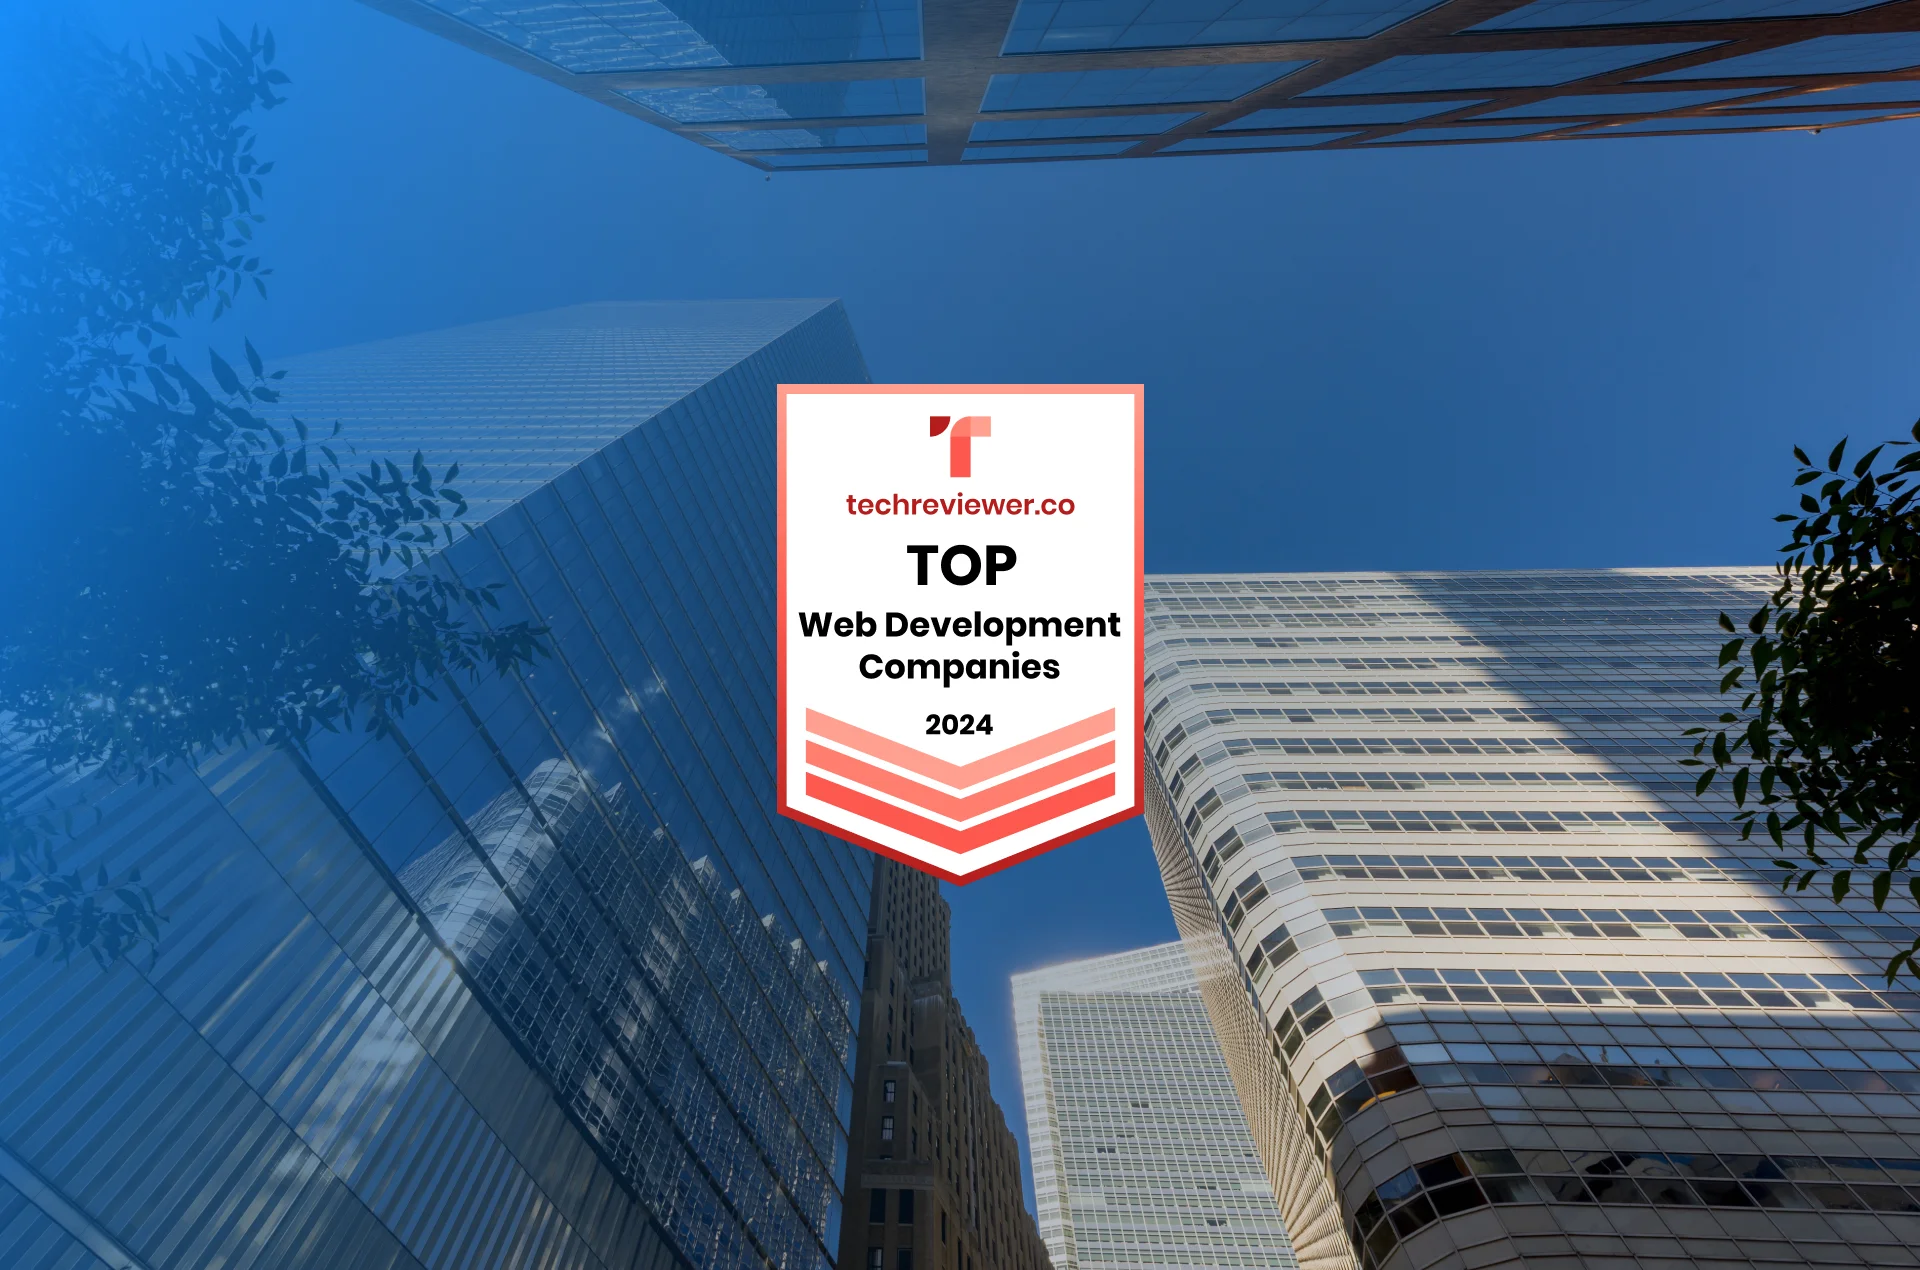 Creatif Agency Recognized as a Top Web Development Company in San Francisco